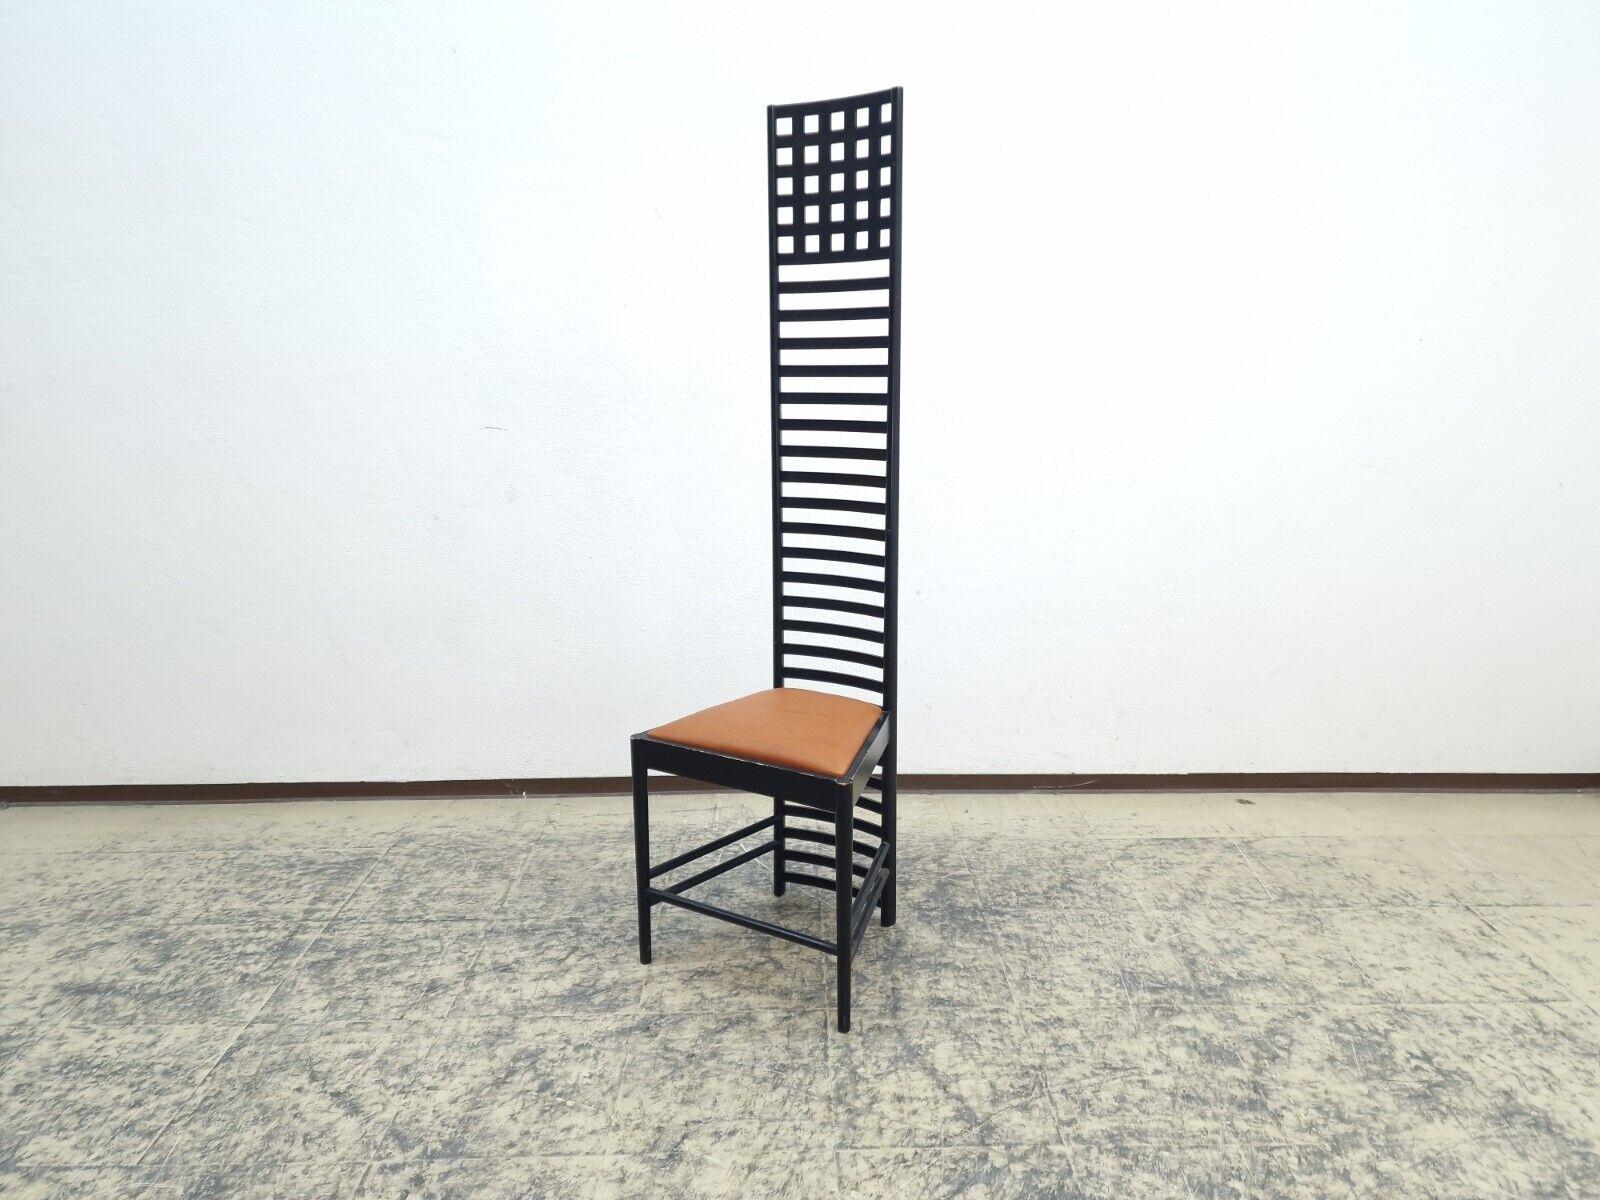 Cassina Rennie Mackintosh Holzstuhl Designerstuhl Hill House chair For Sale 6